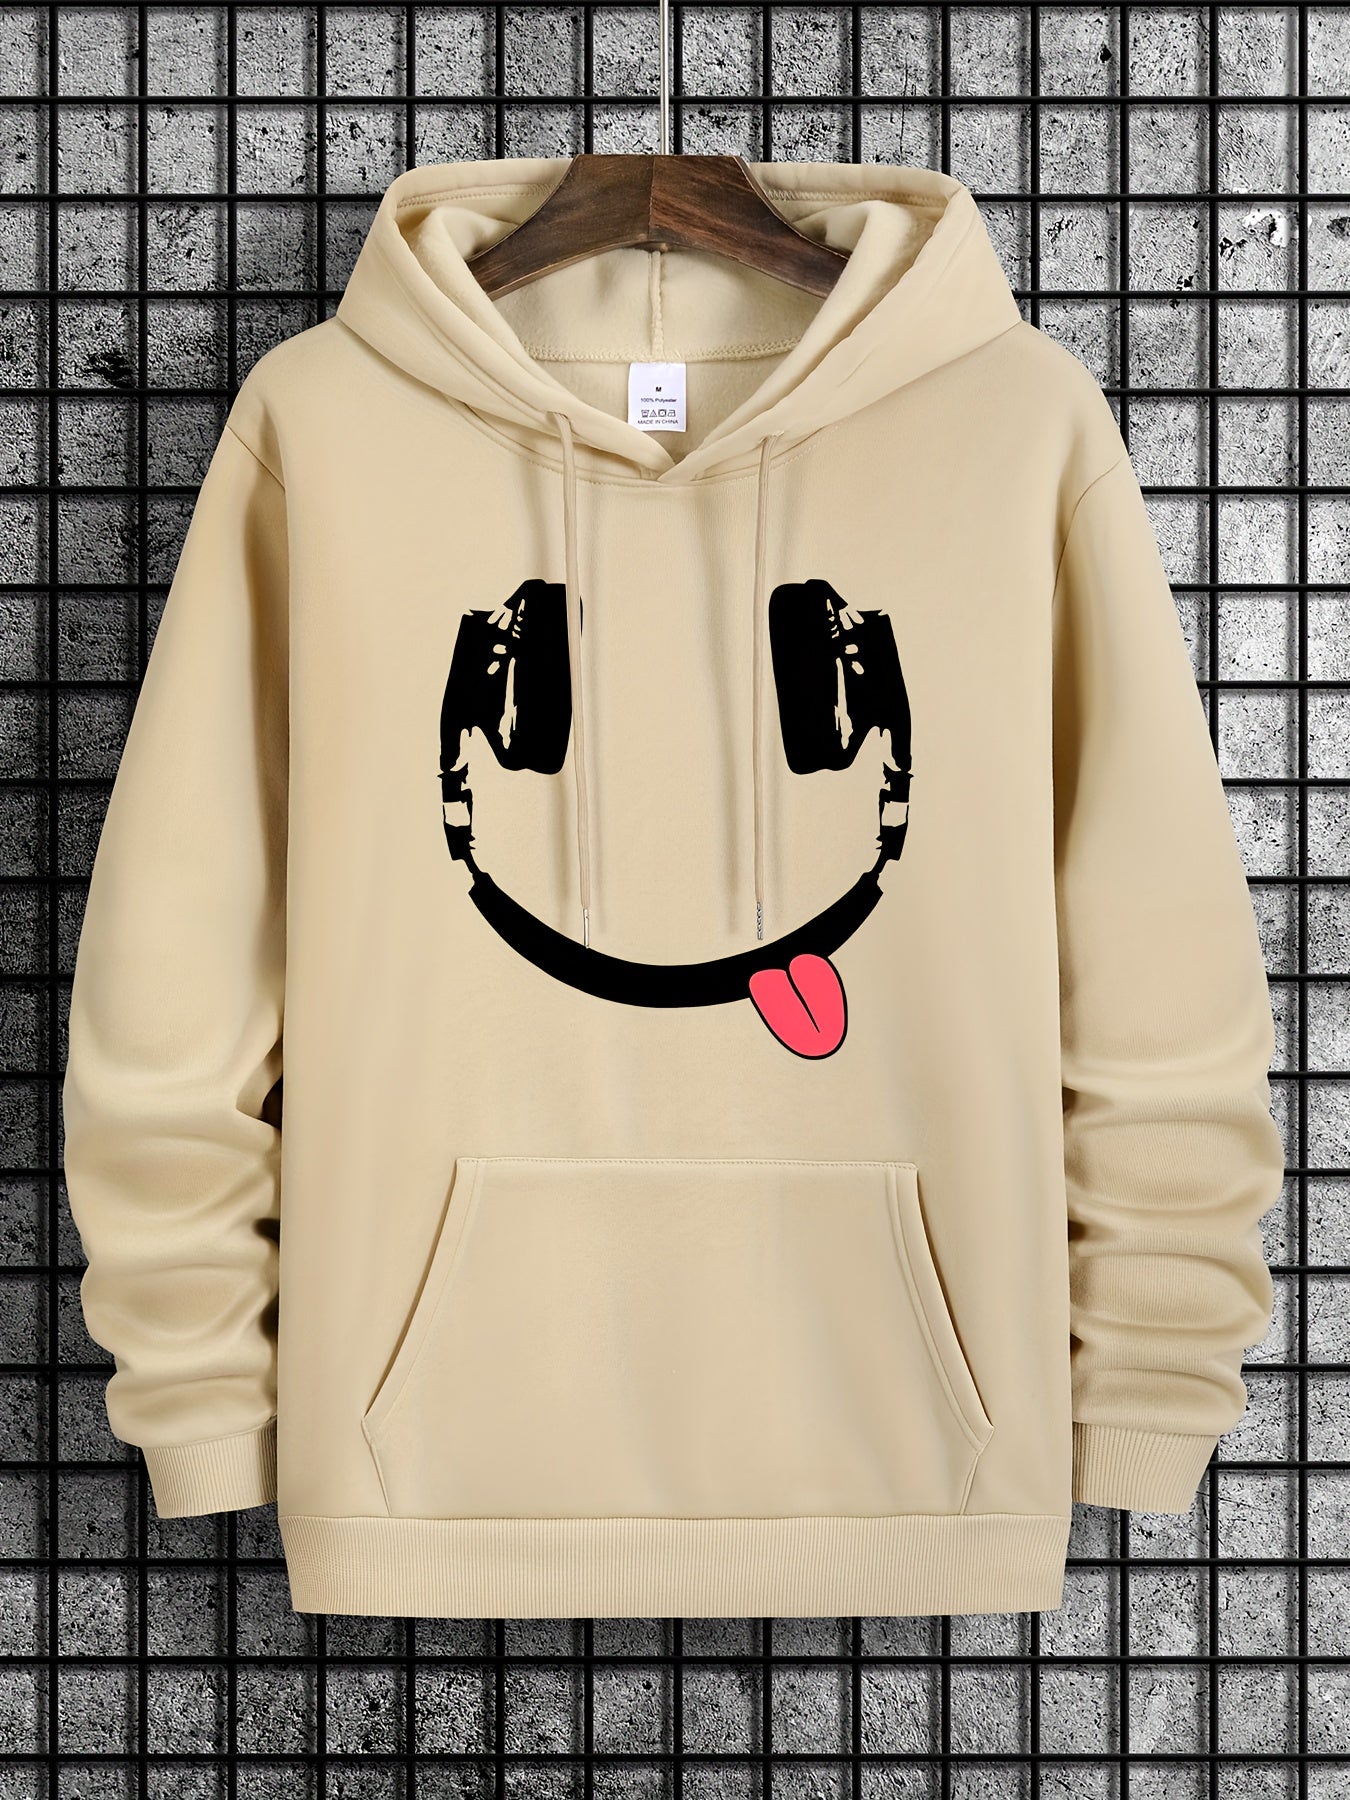 Headphone Smile Print Hoodie, Hoodies For Men, Men's Casual Graphic Design Pullover Hooded Sweatshirt With Kangaroo Pocket Streetwear For Winter Fall, As Gifts